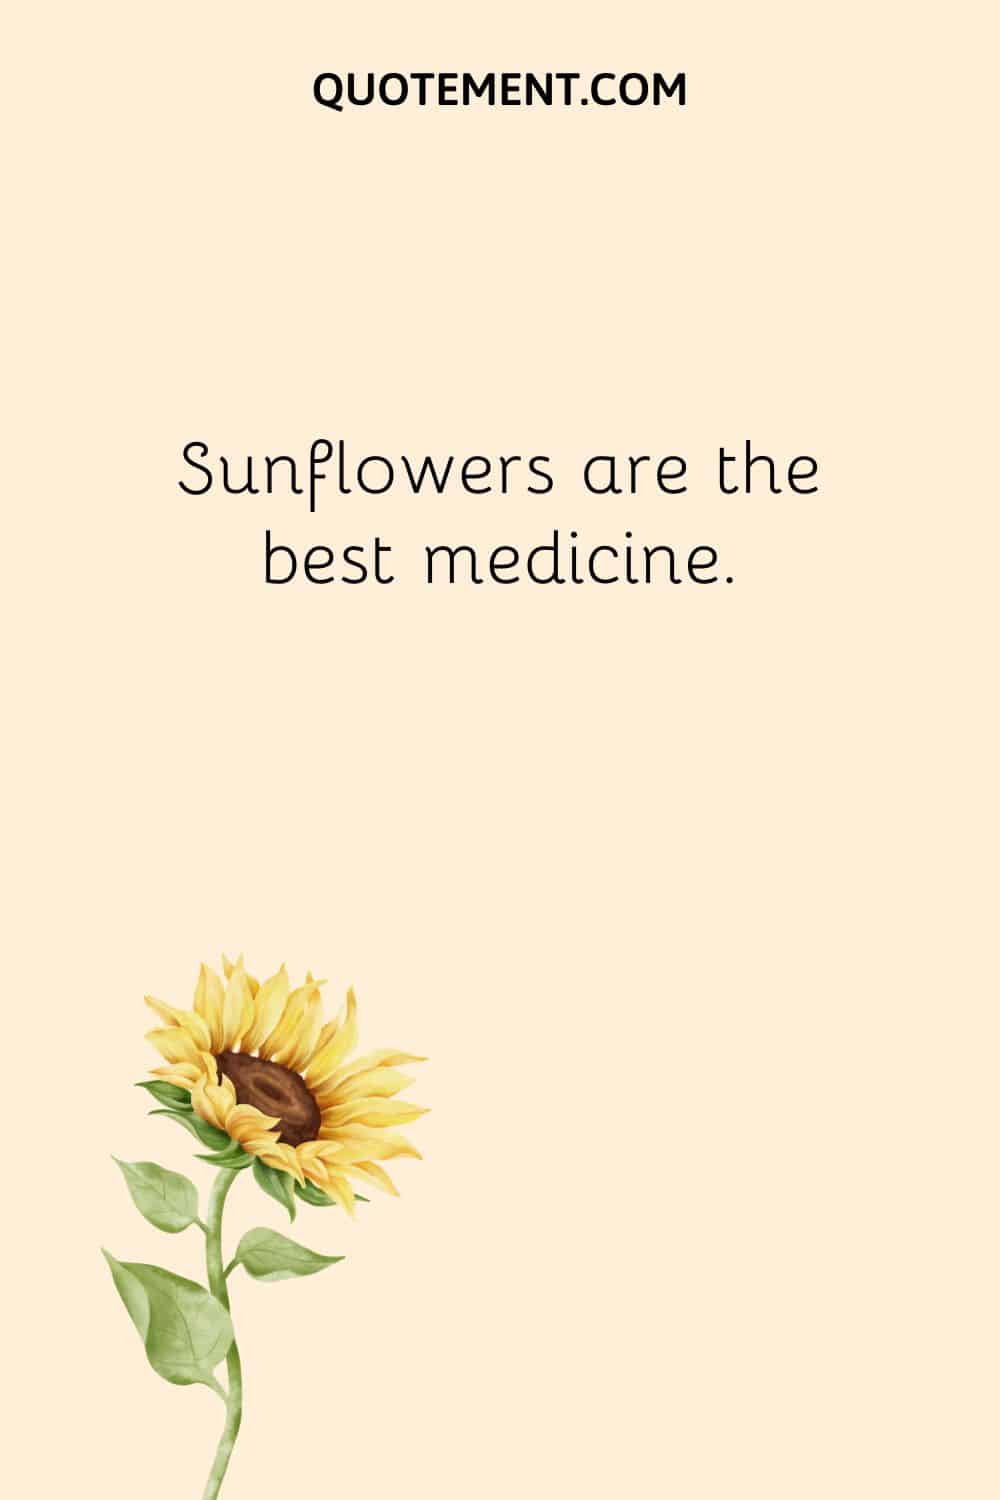 Sunflowers are the best medicine.